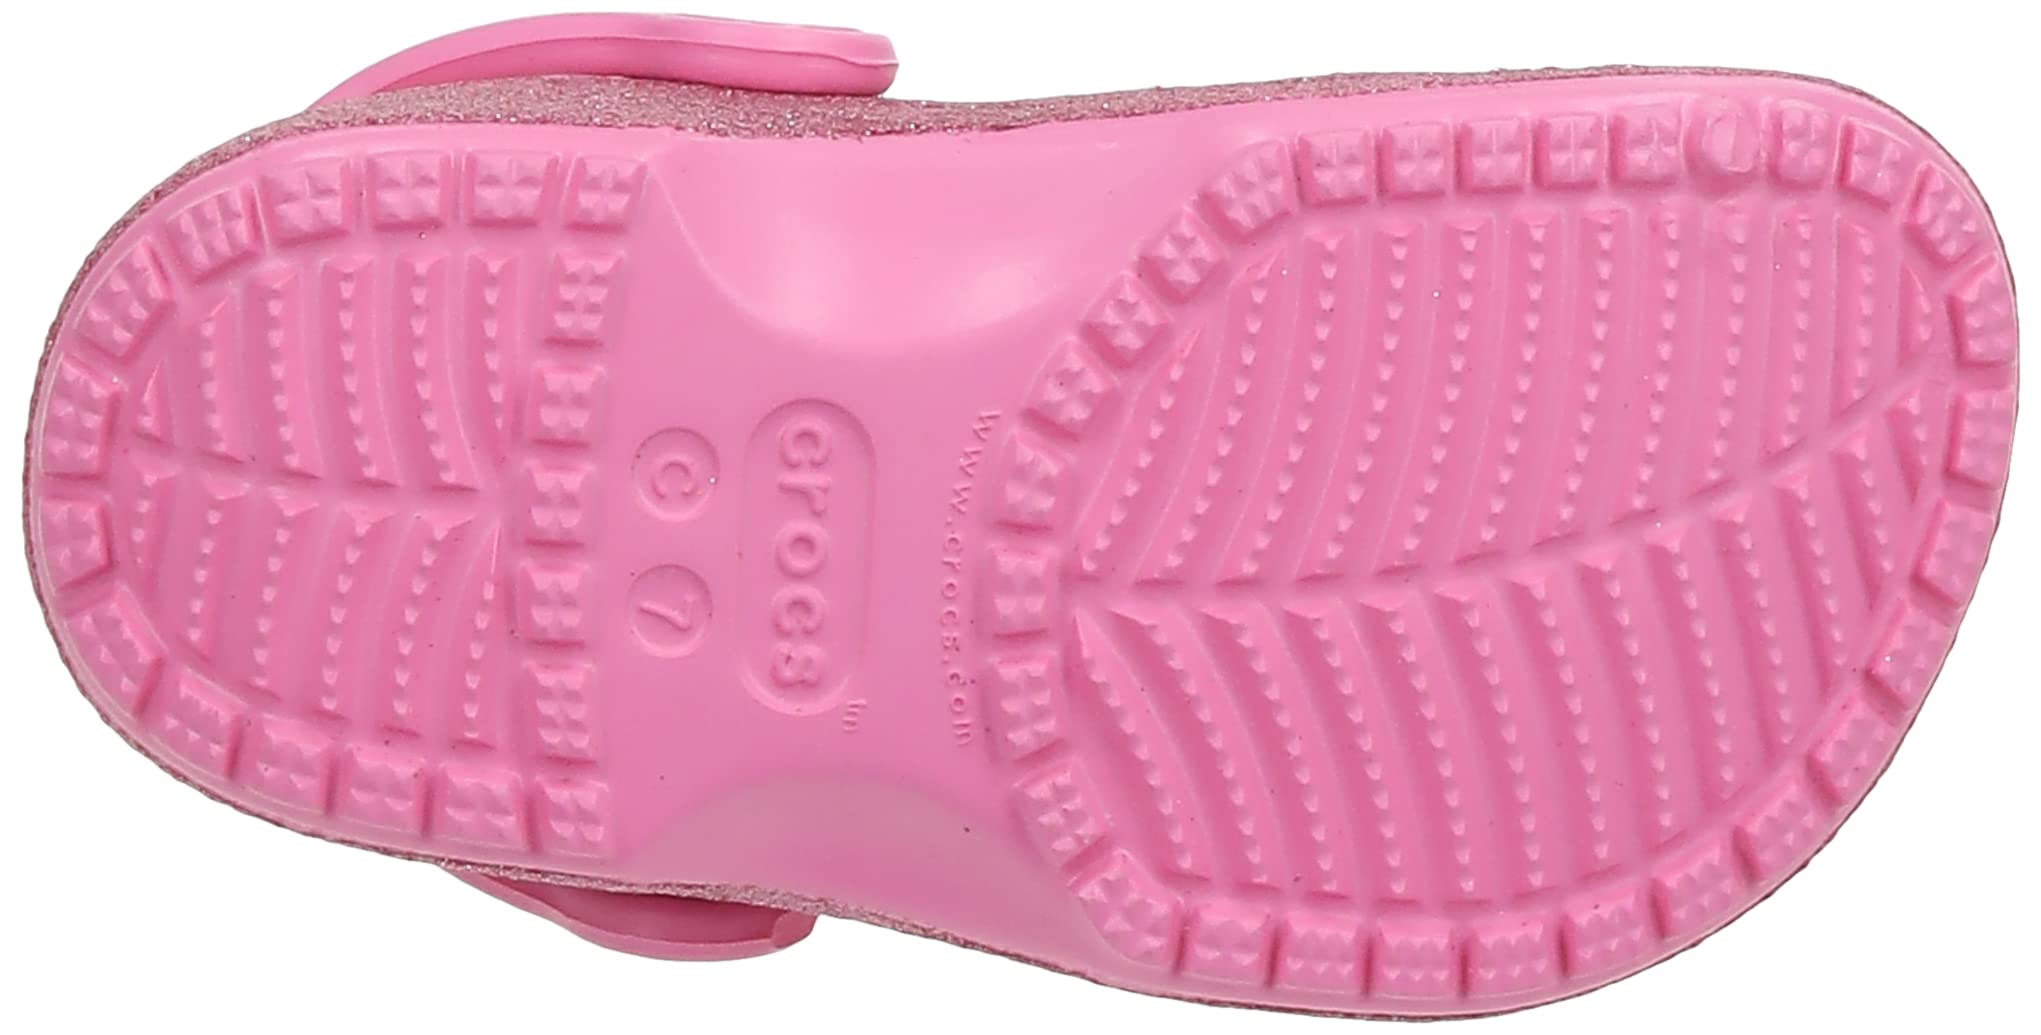 Crocs Unisex-Child Classic Glitter Clogs | Sparkly Shoes for Kids